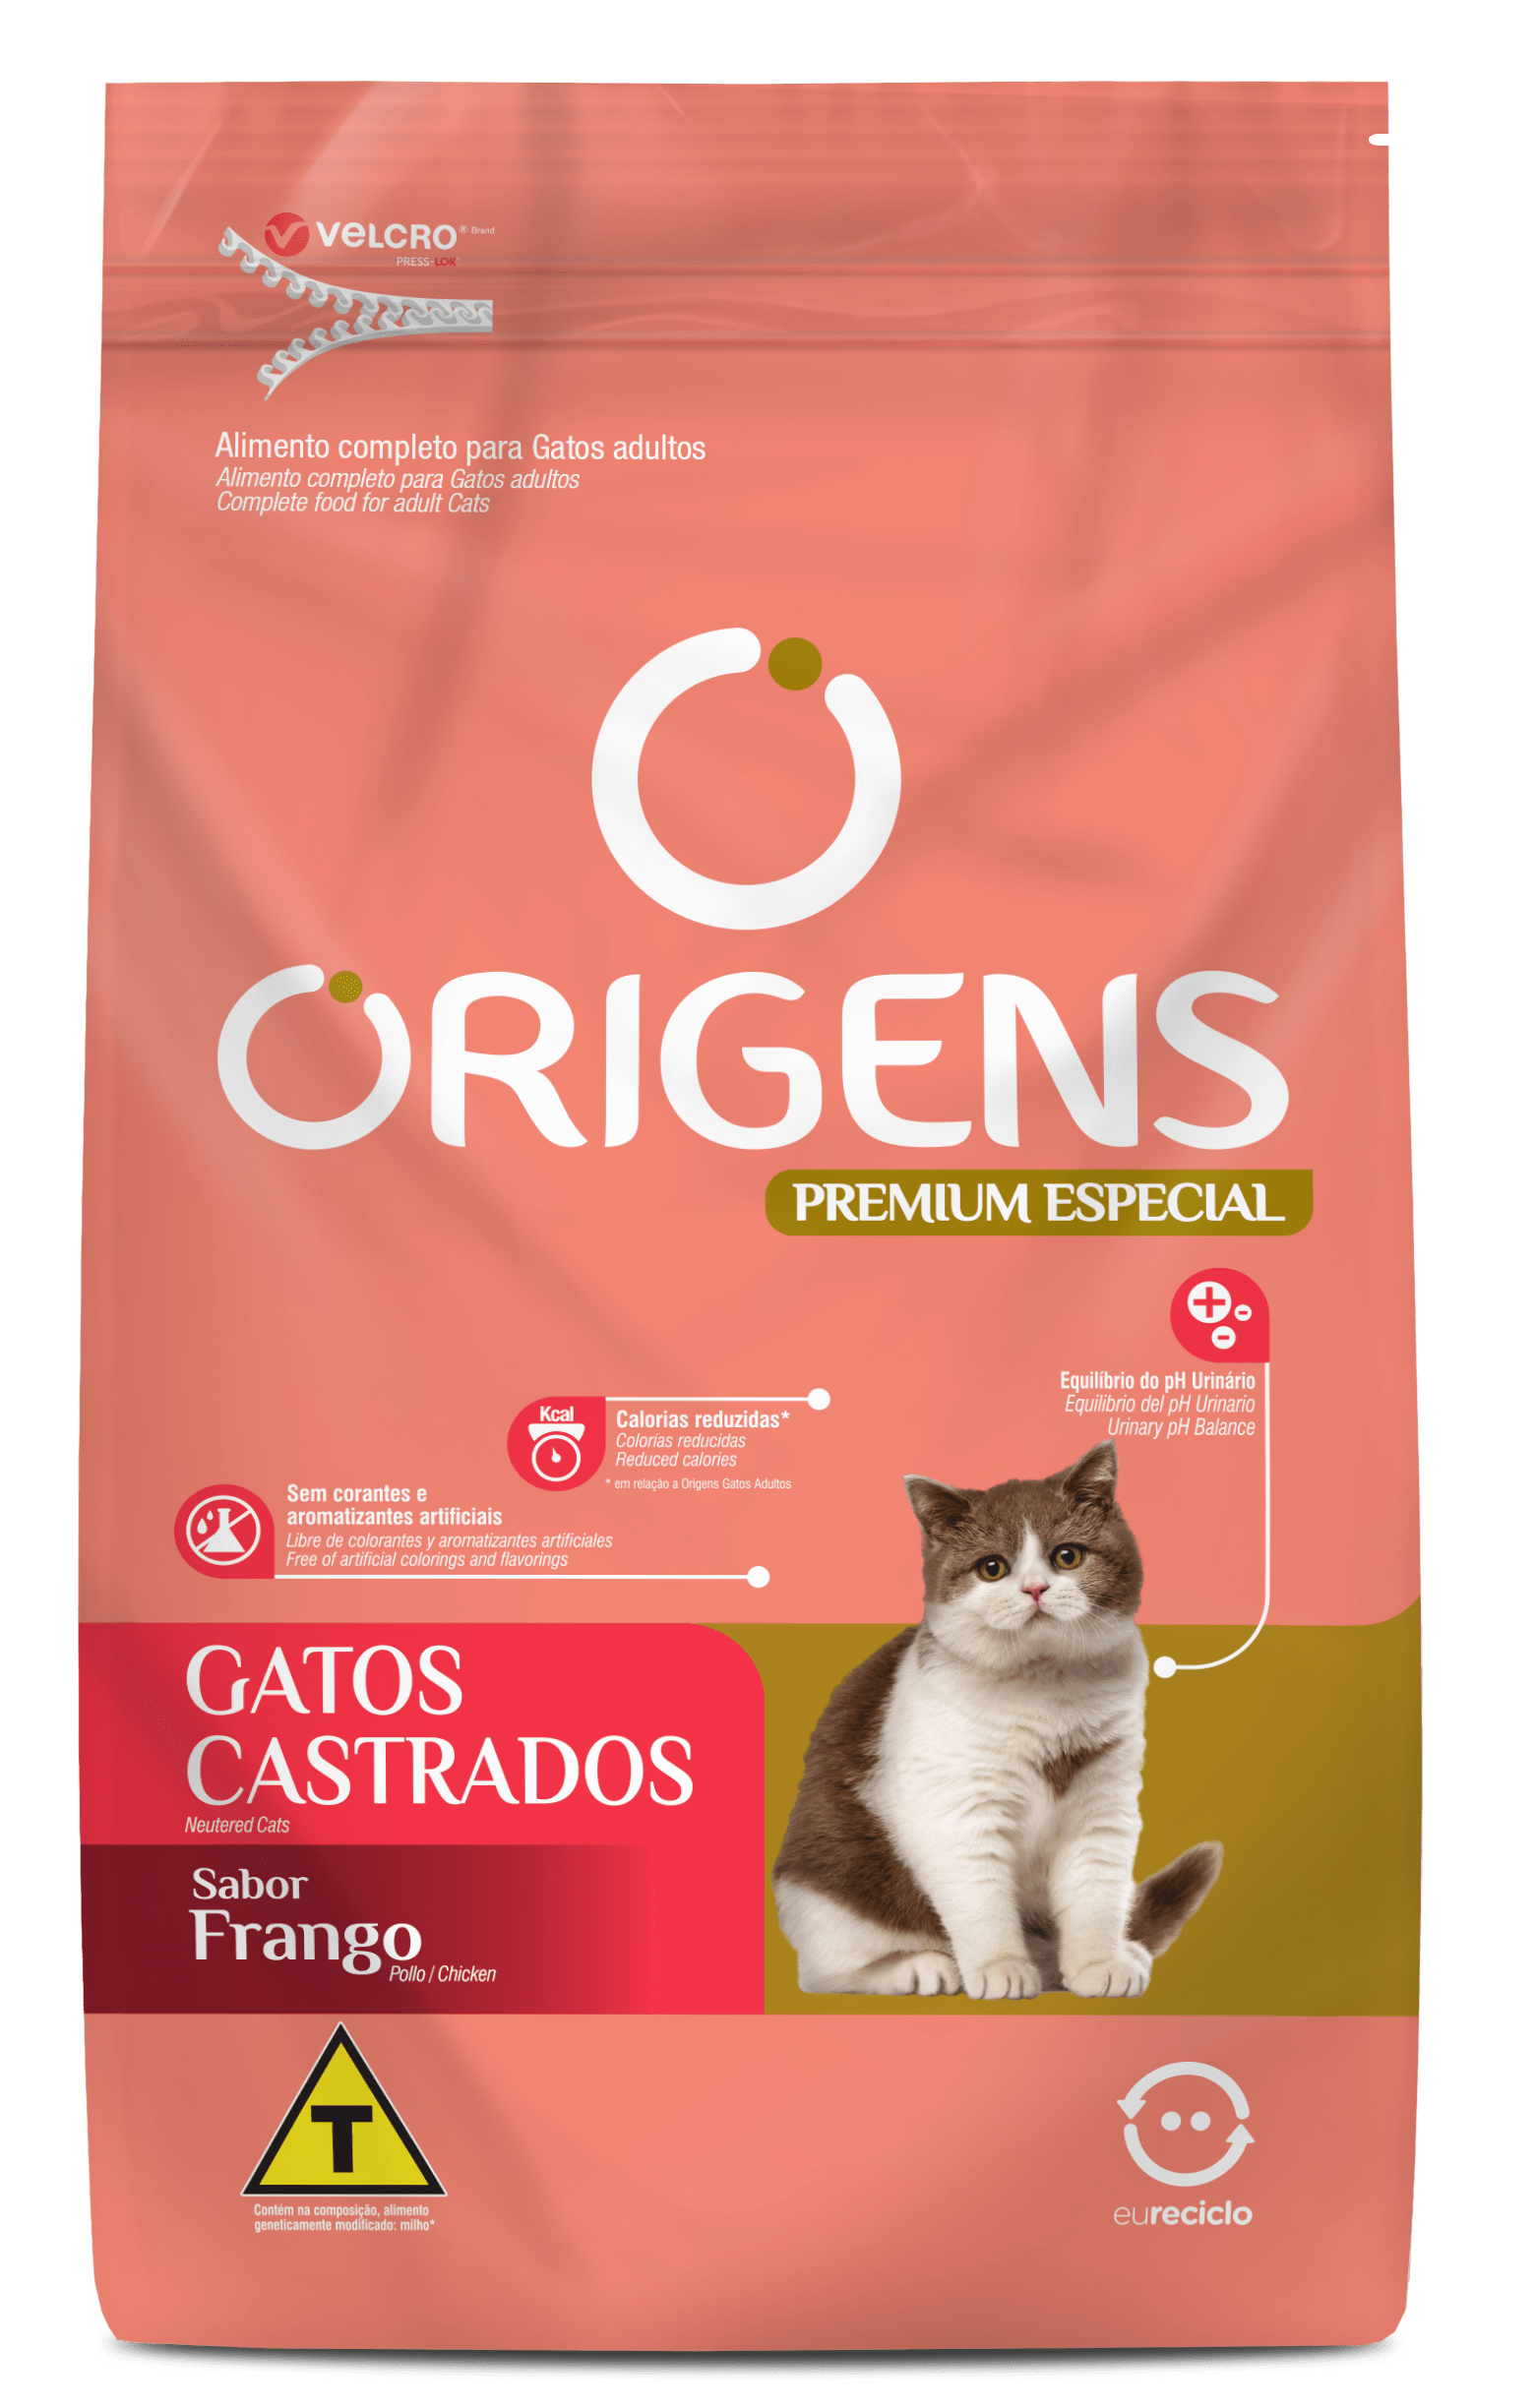 Origens Premium Especial Neutered Cats Chicken flavor